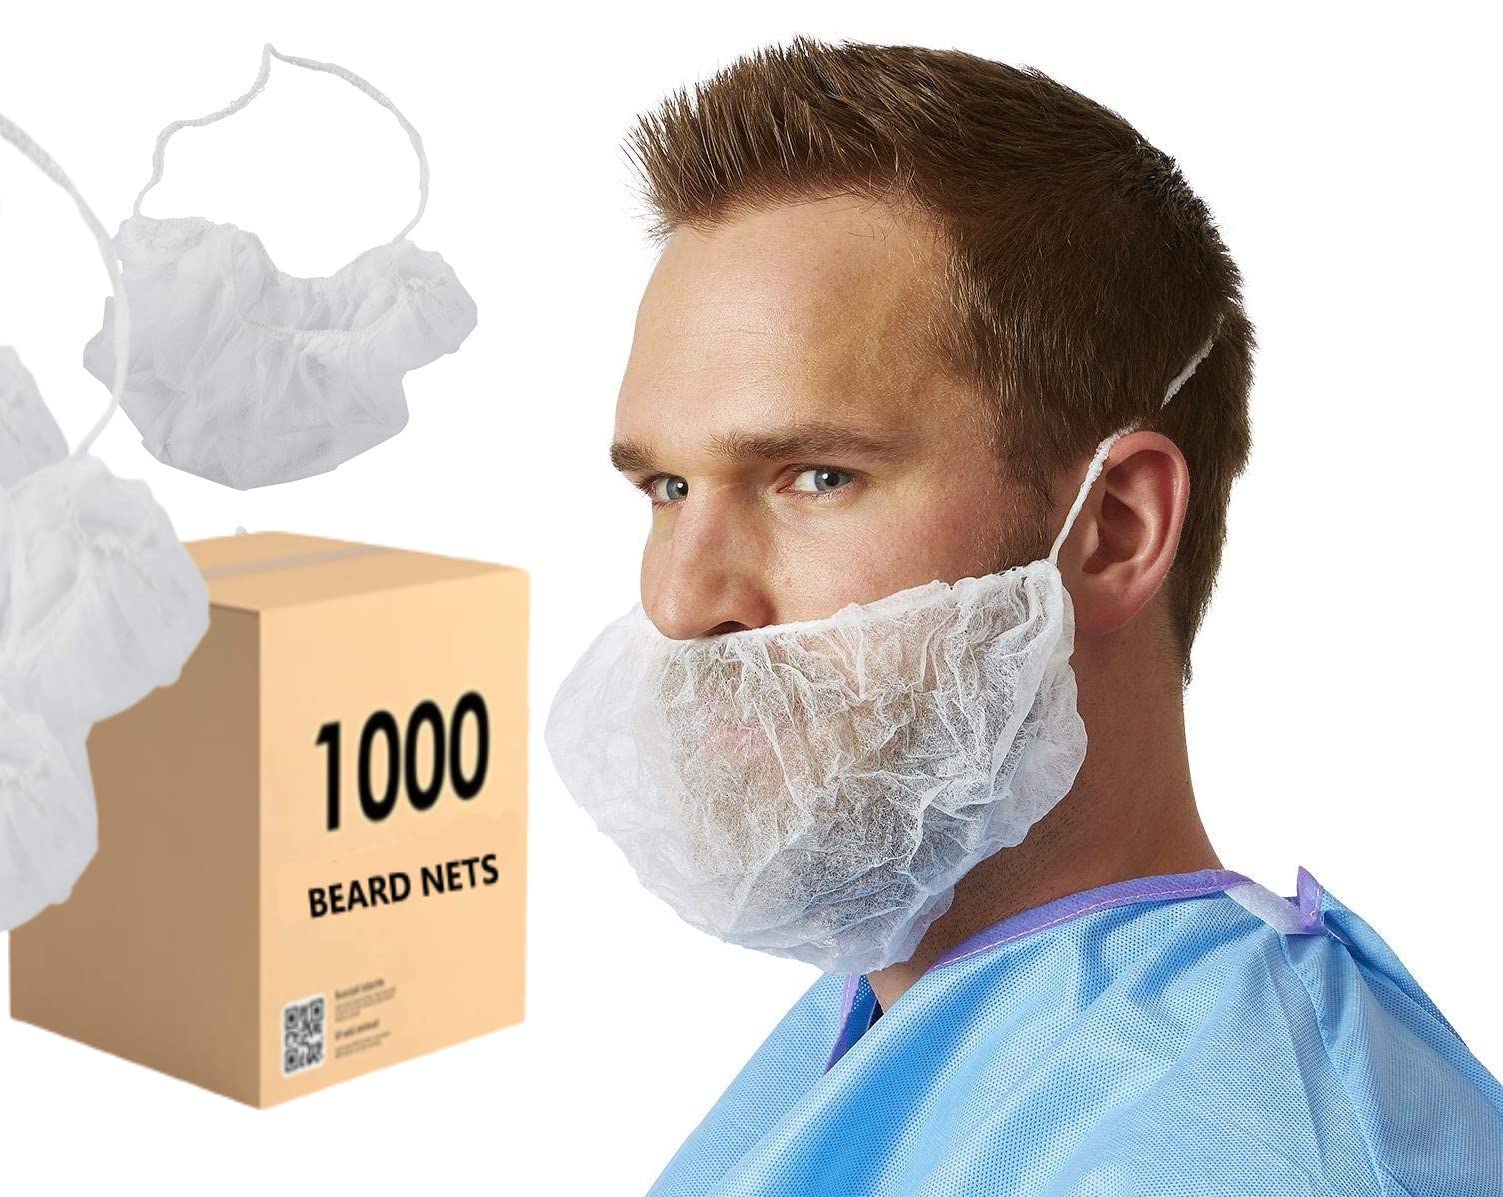 1000 beard nets